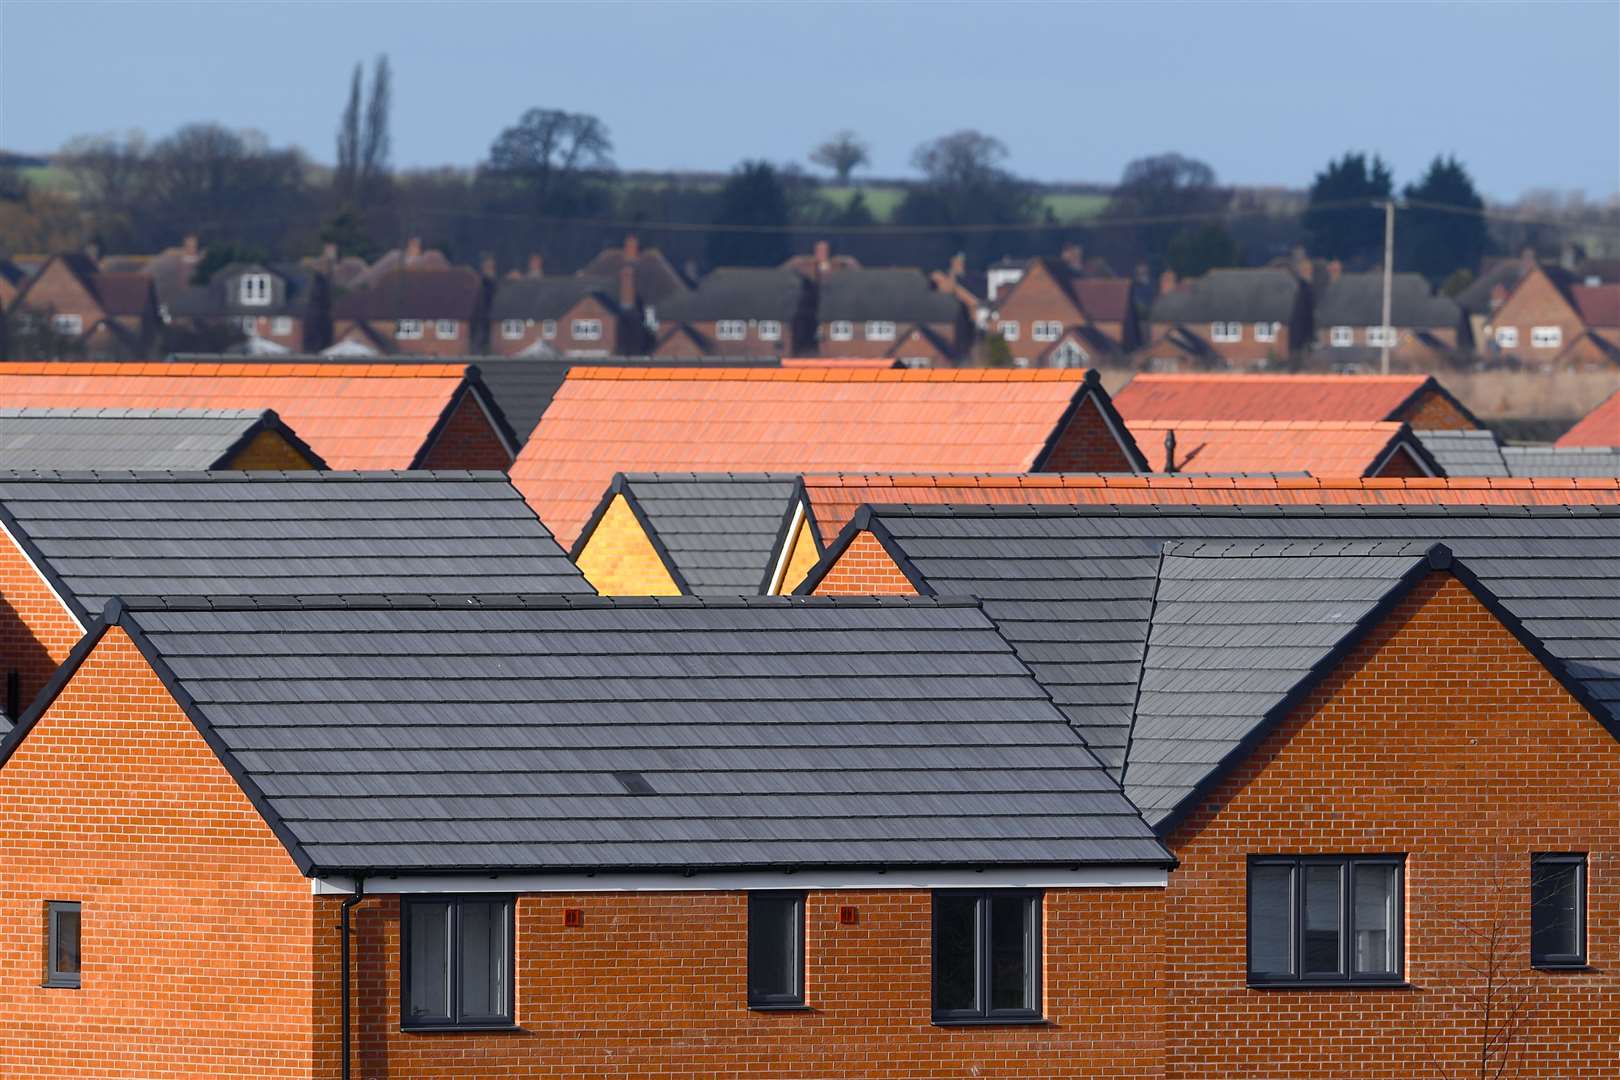 Maidstone council wants to build 5,000 homes near Lenham